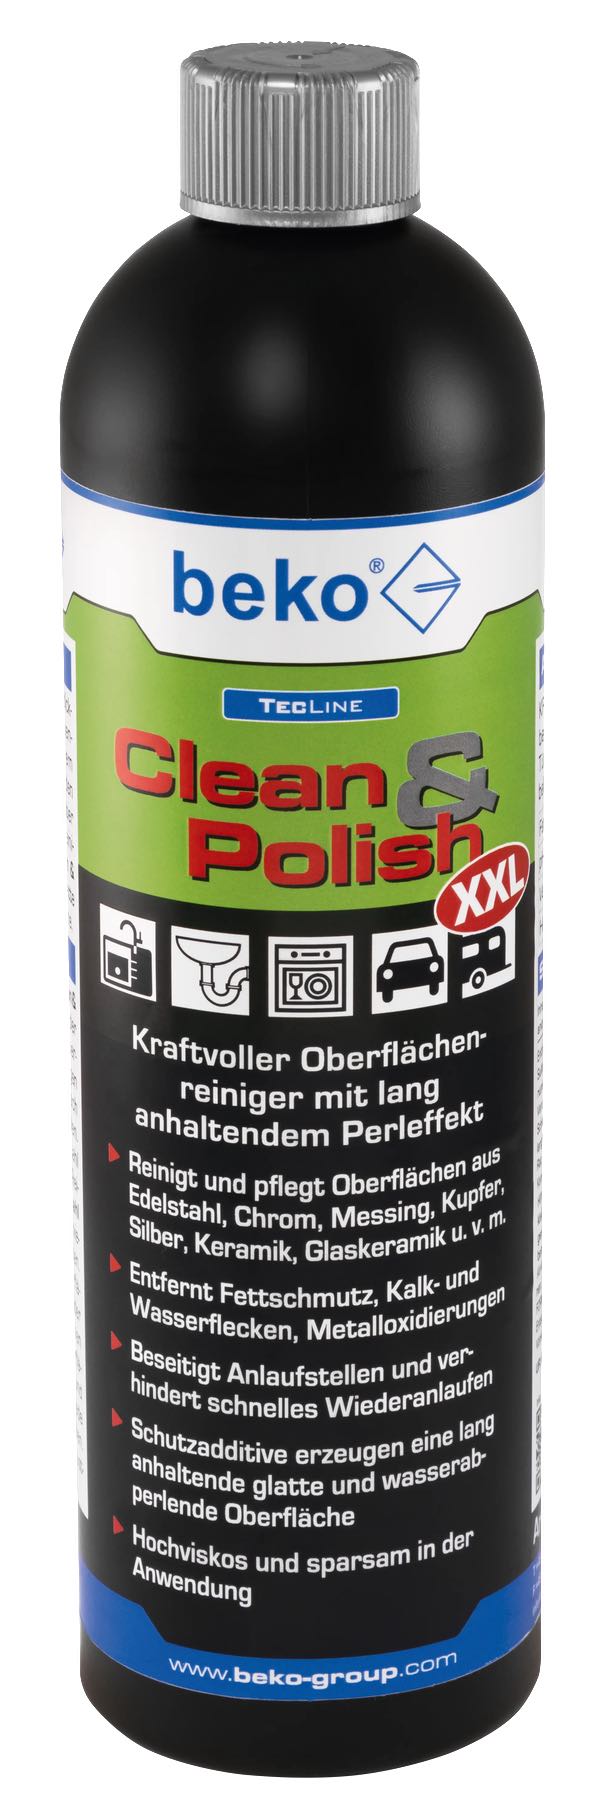 TecLine Clean & Polish 750 ml - Edelstahl Oberflächenreiniger